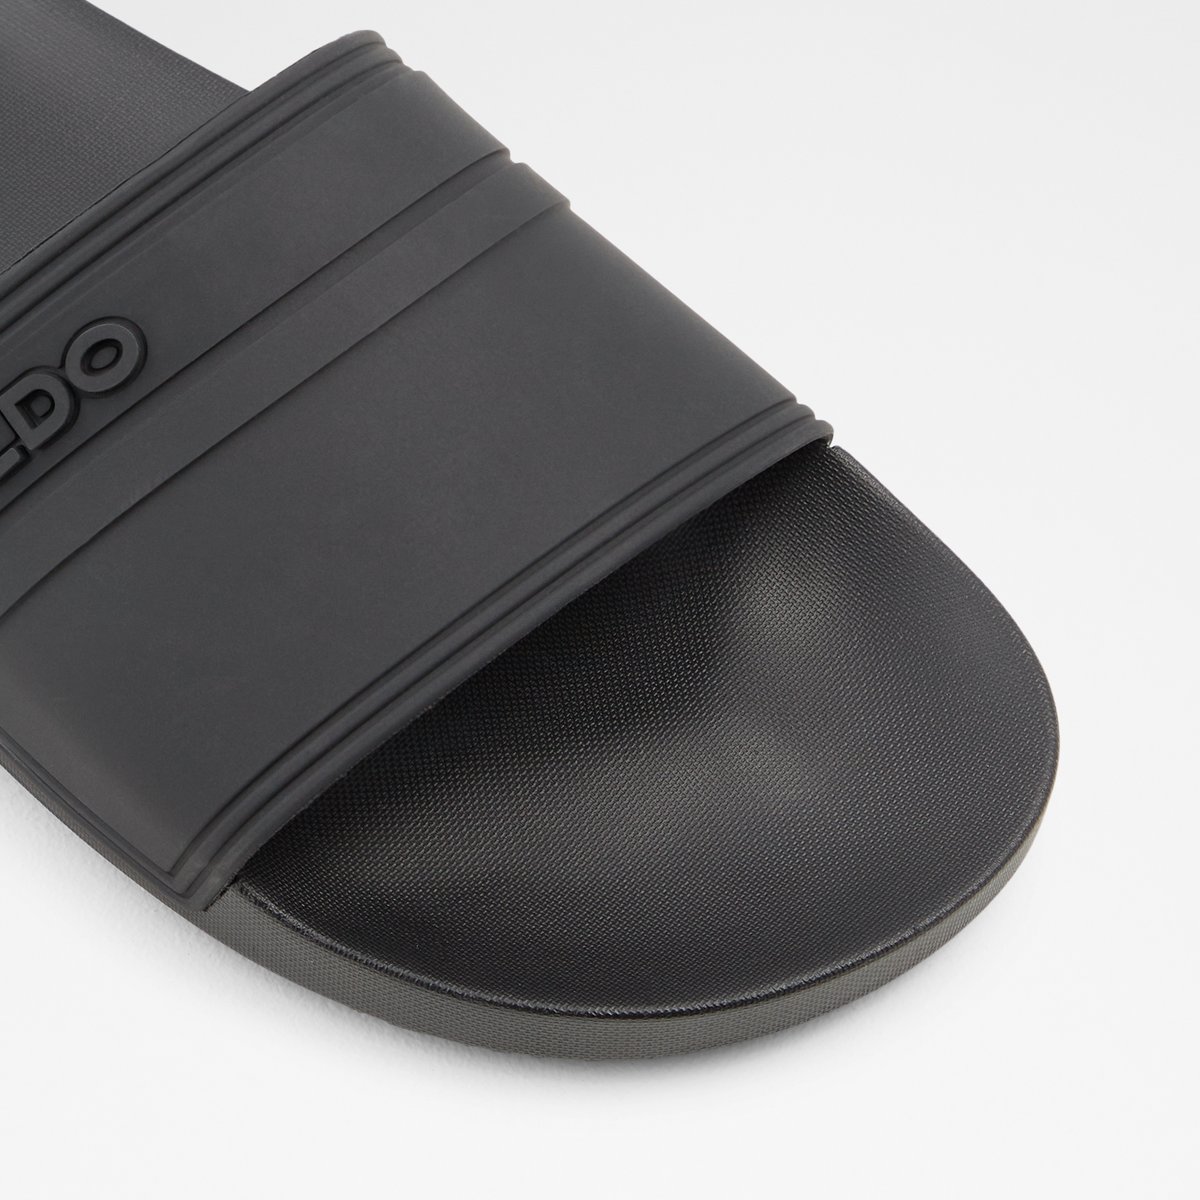 Dinmore Black Synthetic Rubber Men's Slides | ALDO Canada